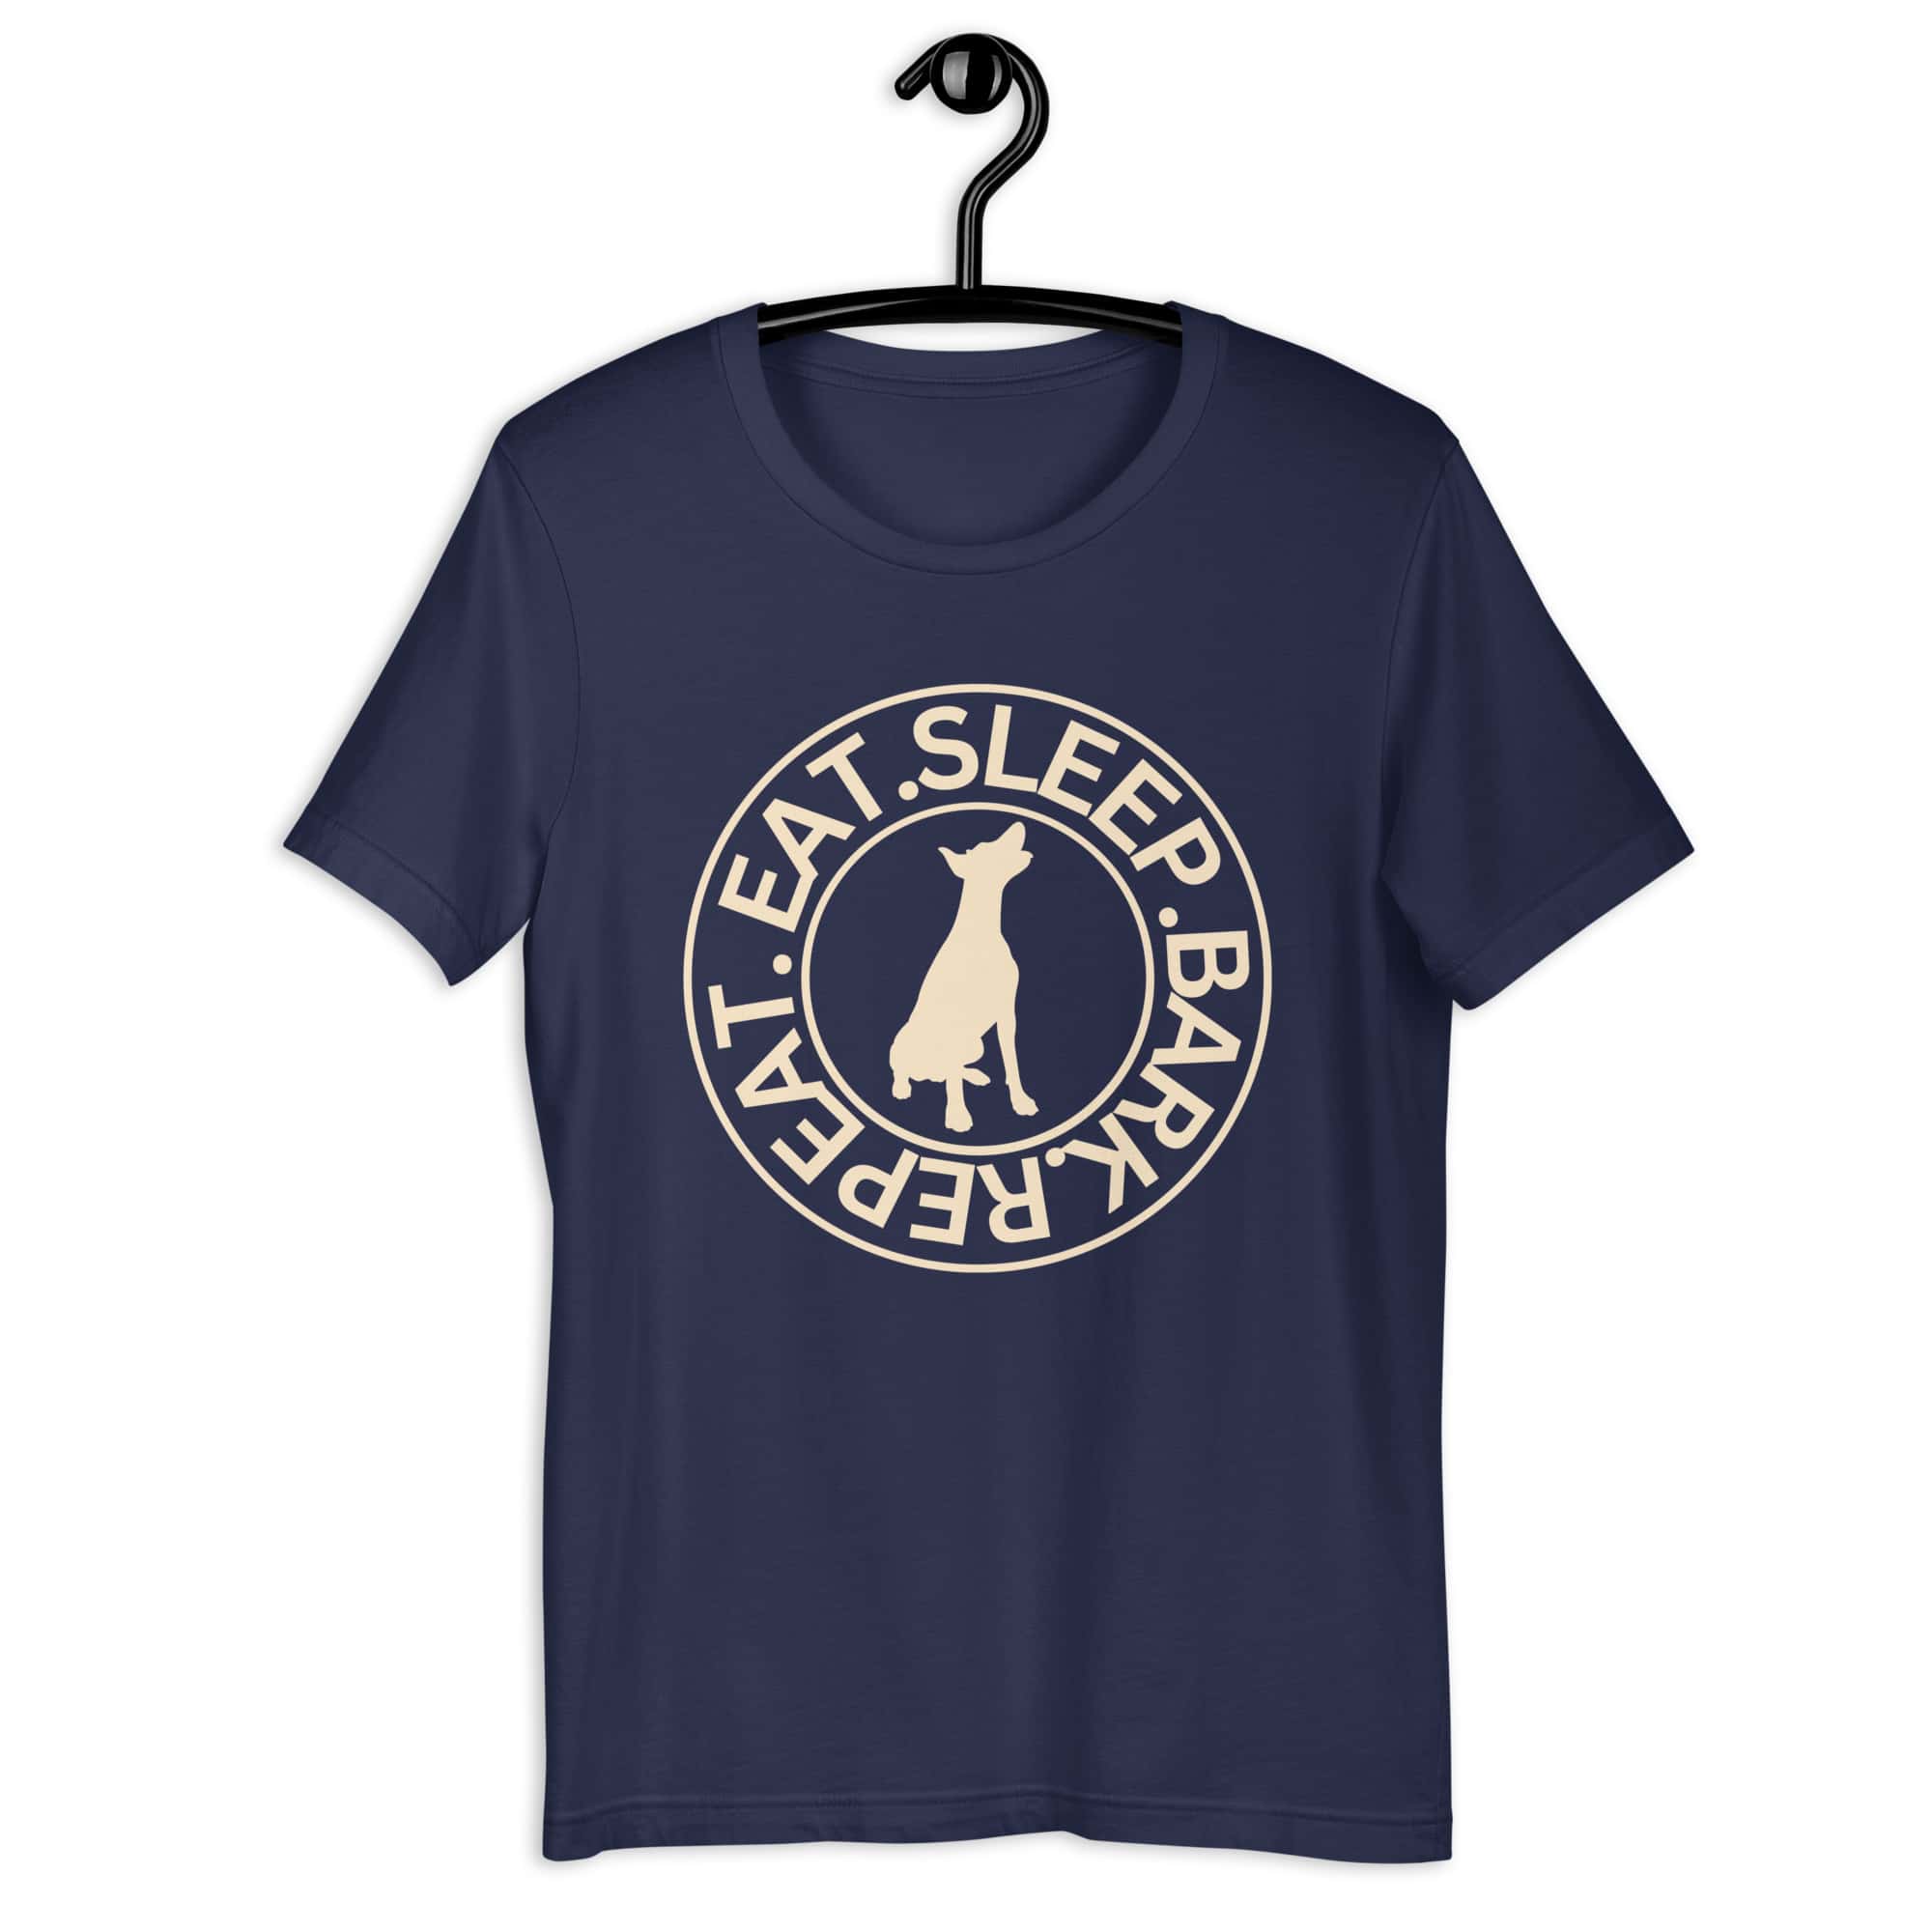 Eat Sleep Bark Repeat Terrier Unisex T-Shirt. Navy